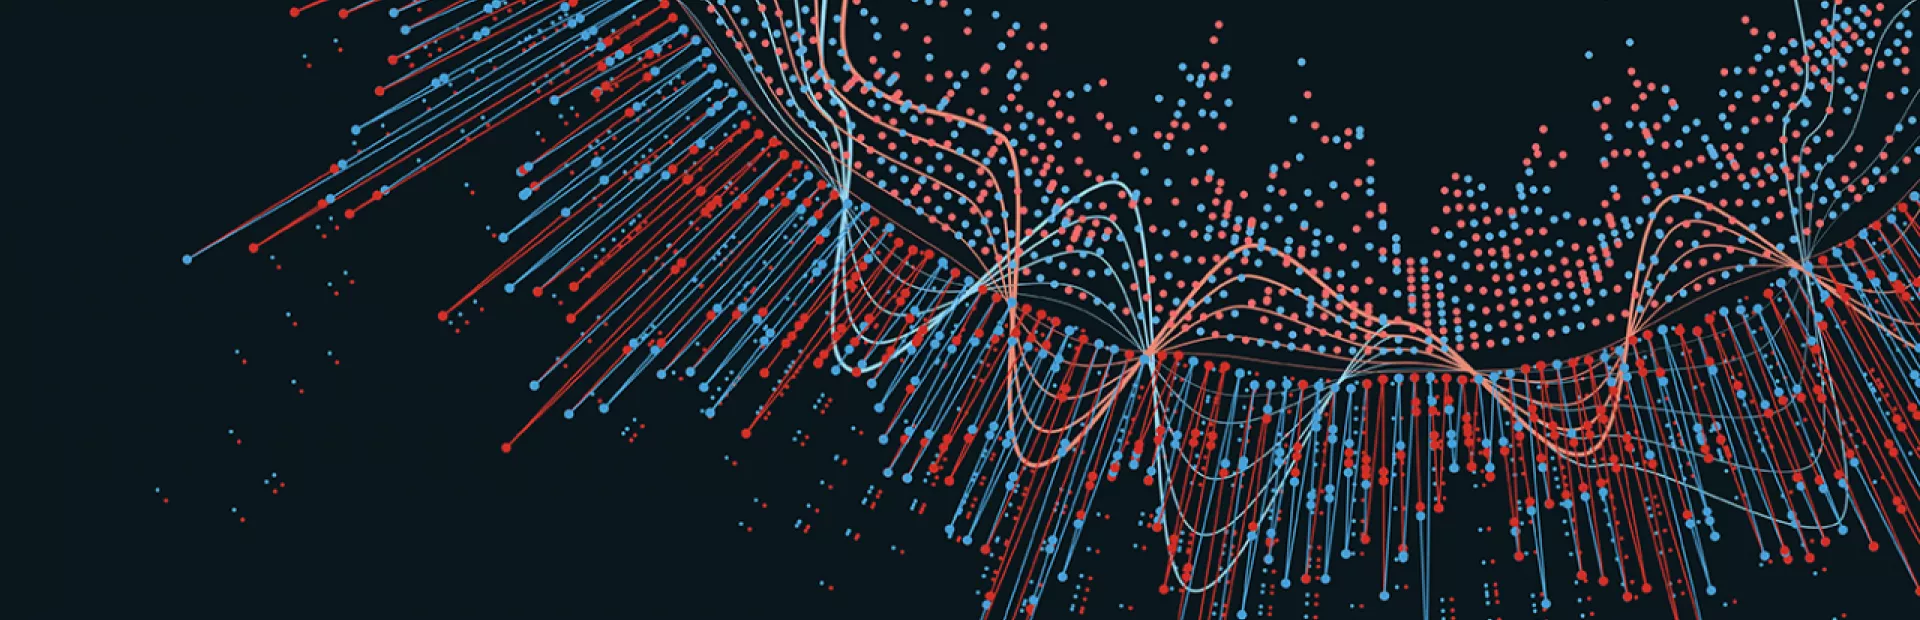 Big data reveals new patterns